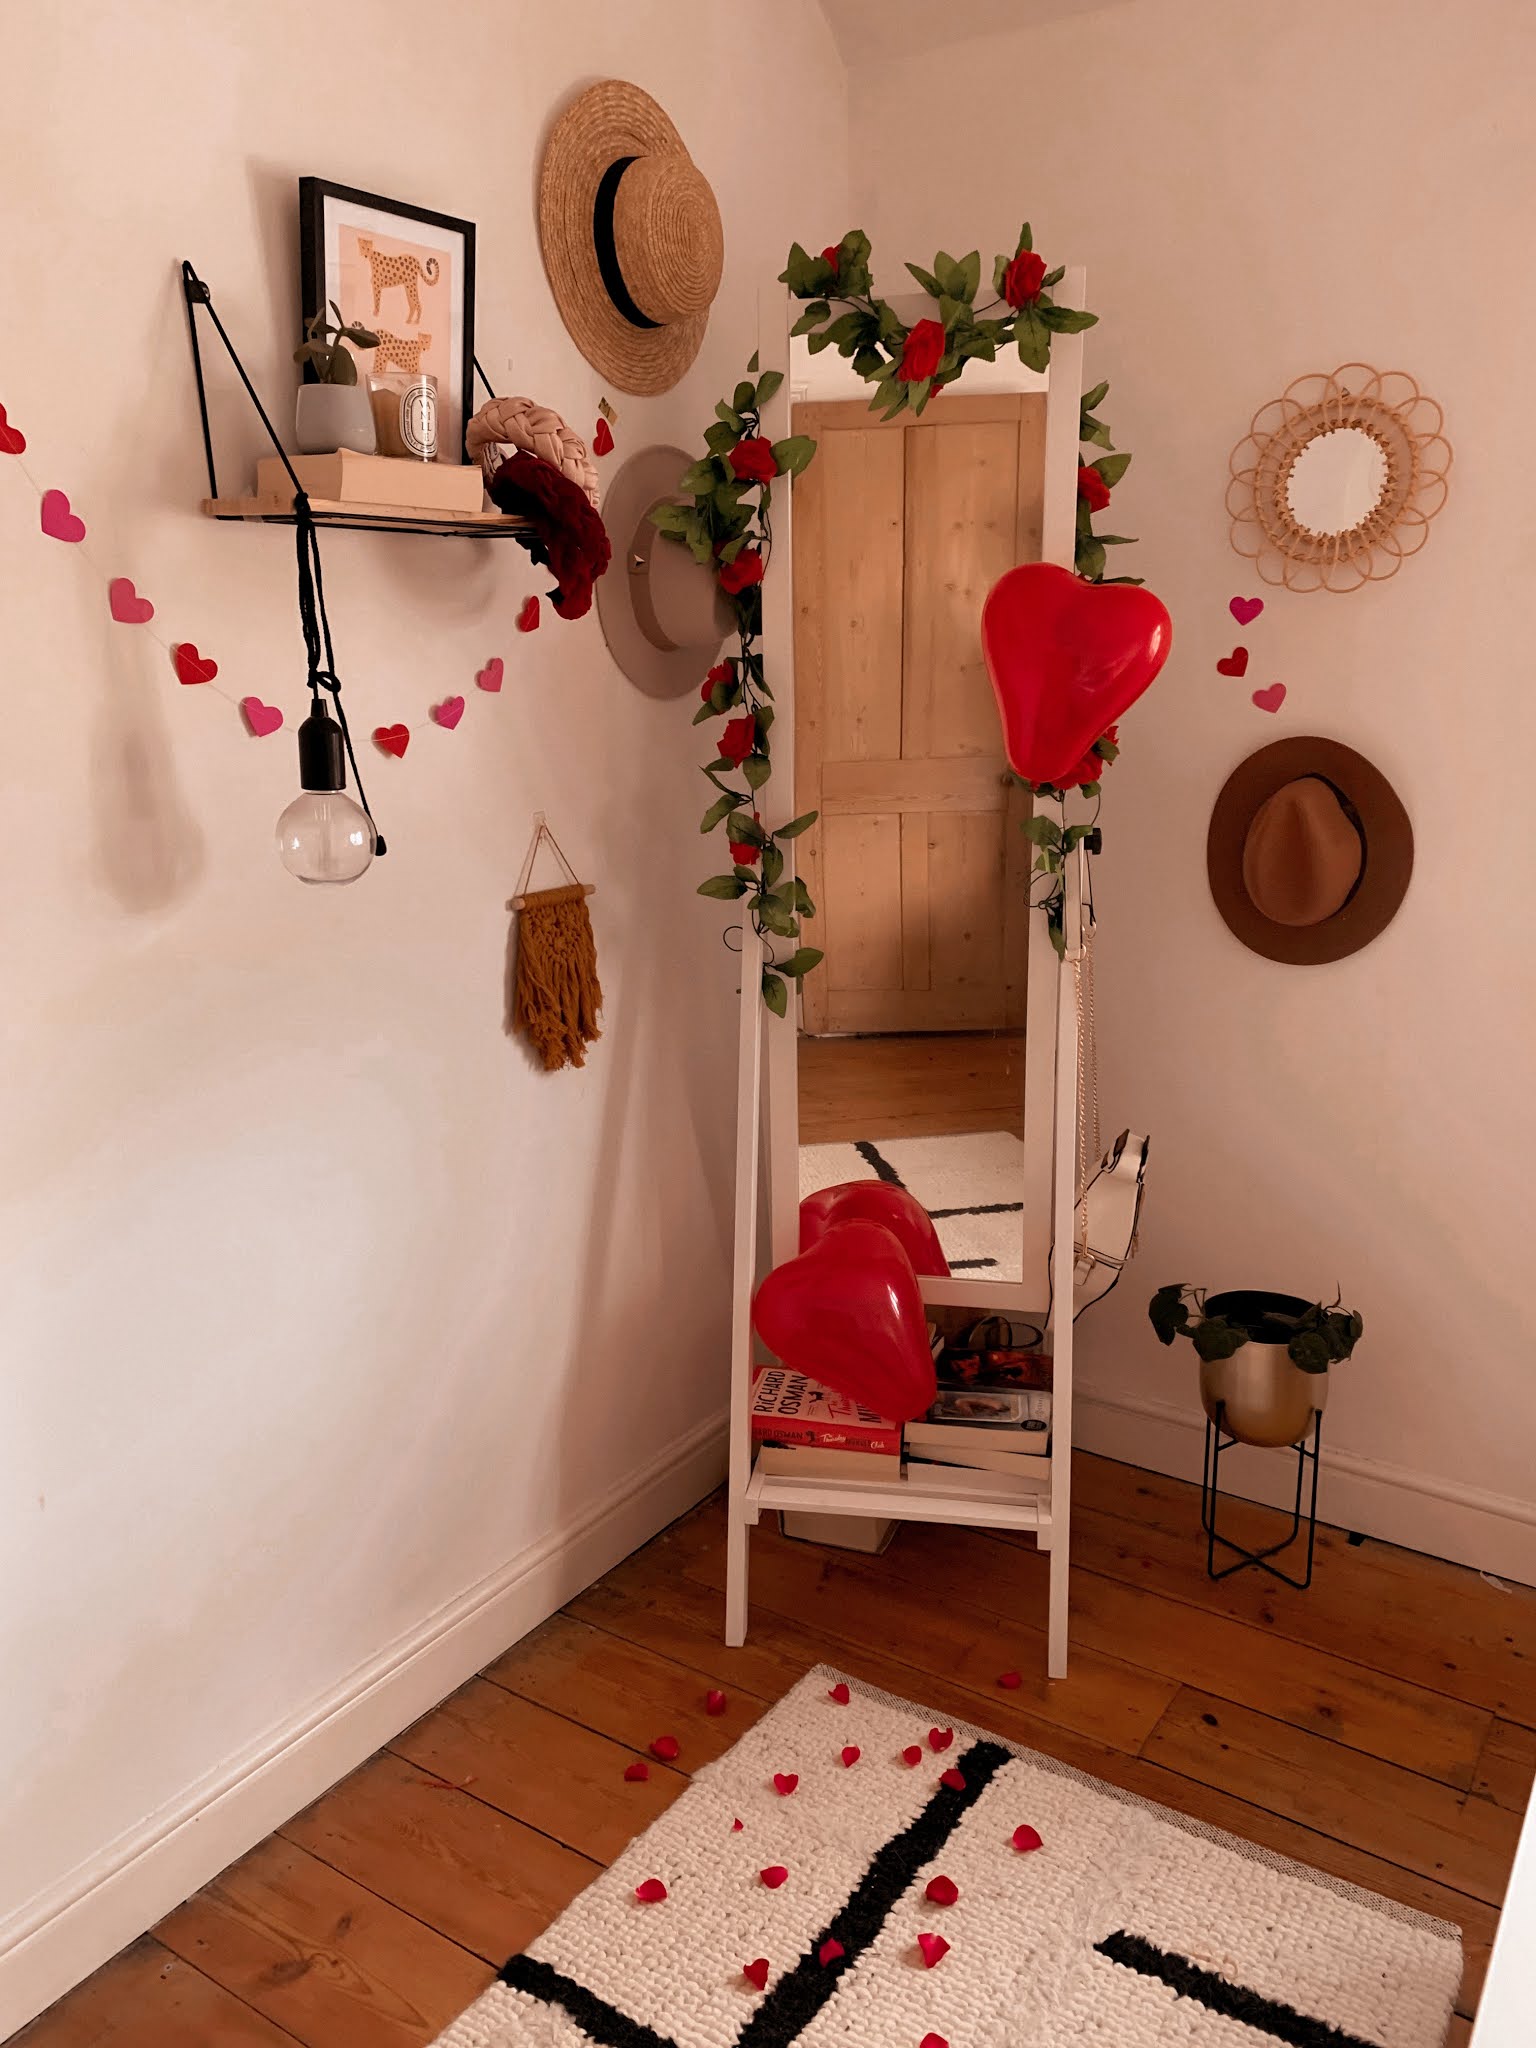 Amazon Valentine’s Day Home Decorations